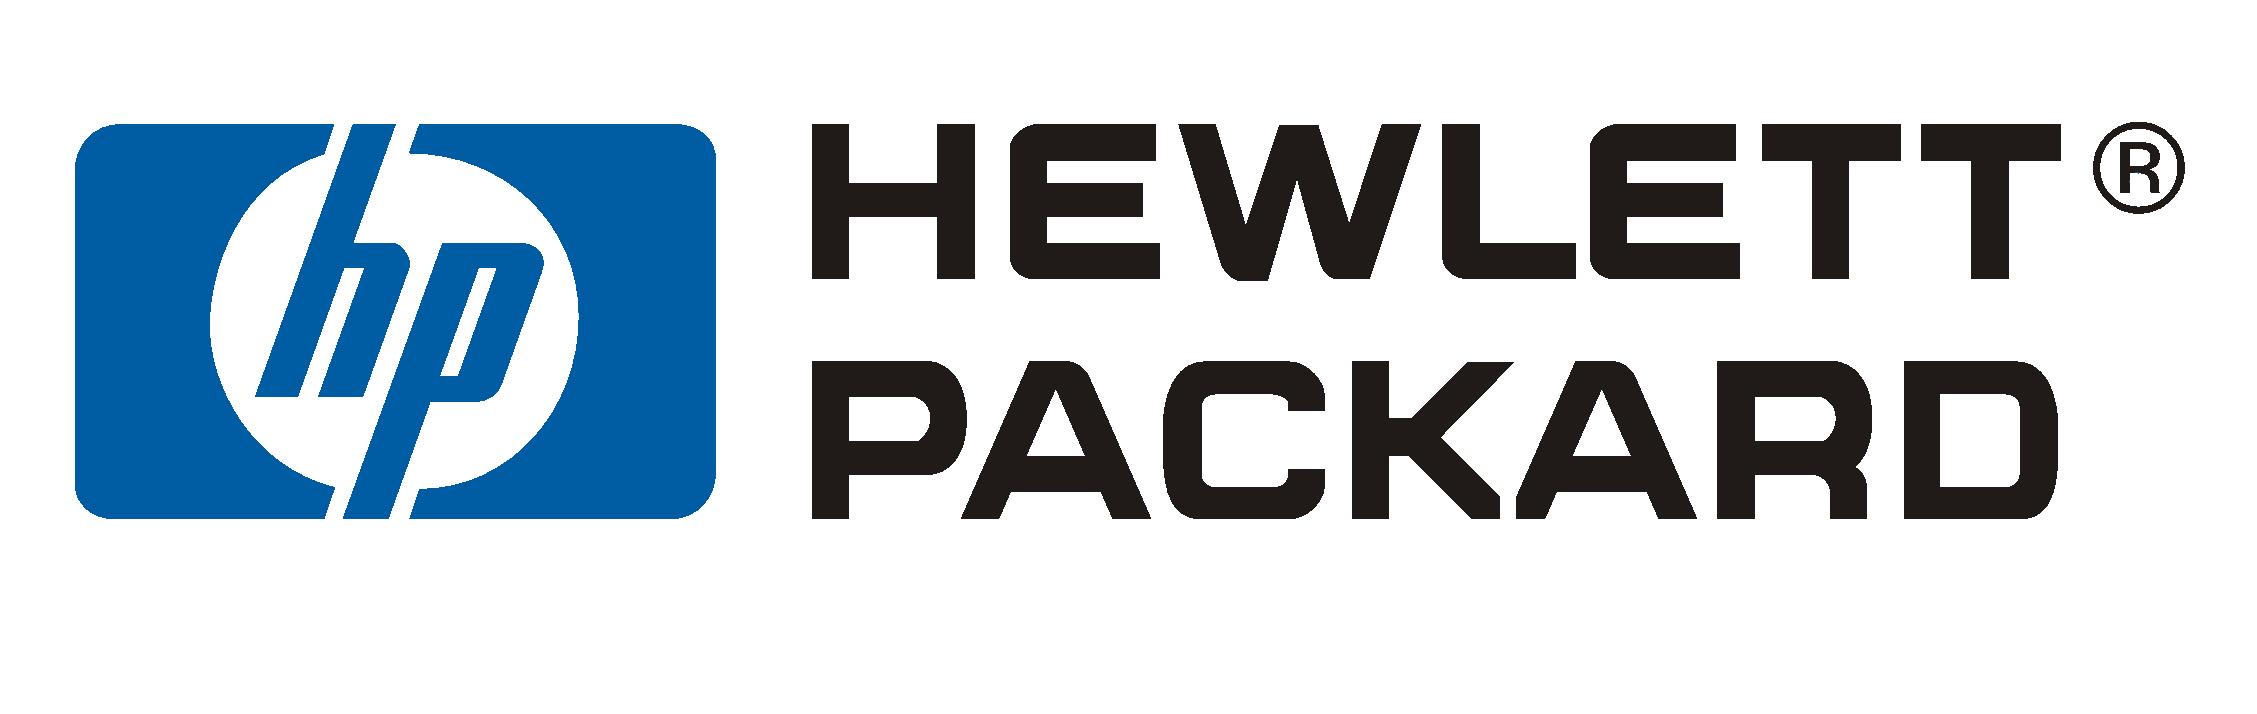 Hewlett Packard Inc Logo - HP Logo, Hewlett-Packard symbol meaning, history and evolution